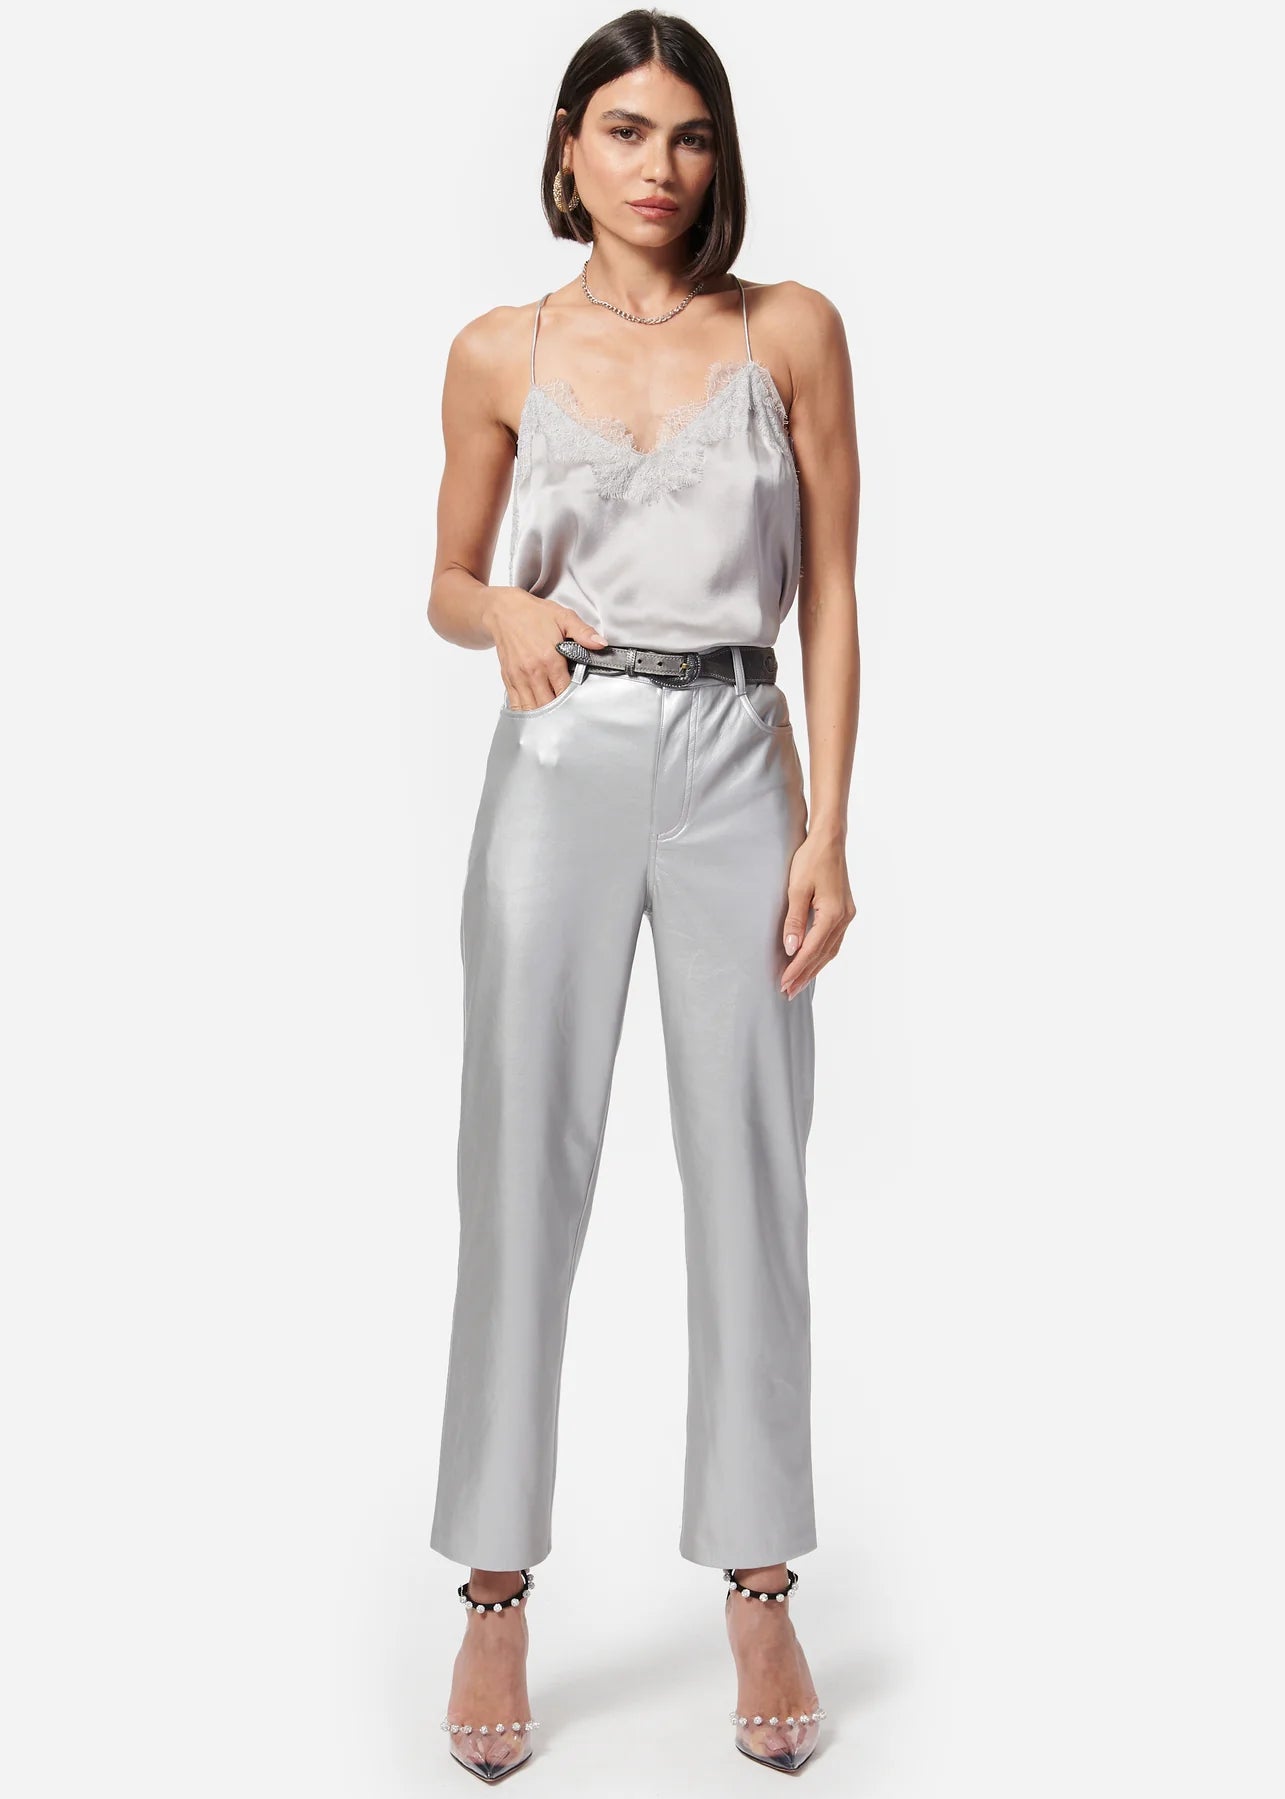 Cami Hanie Vegan Leather Pant in Silver - Estilo Boutique